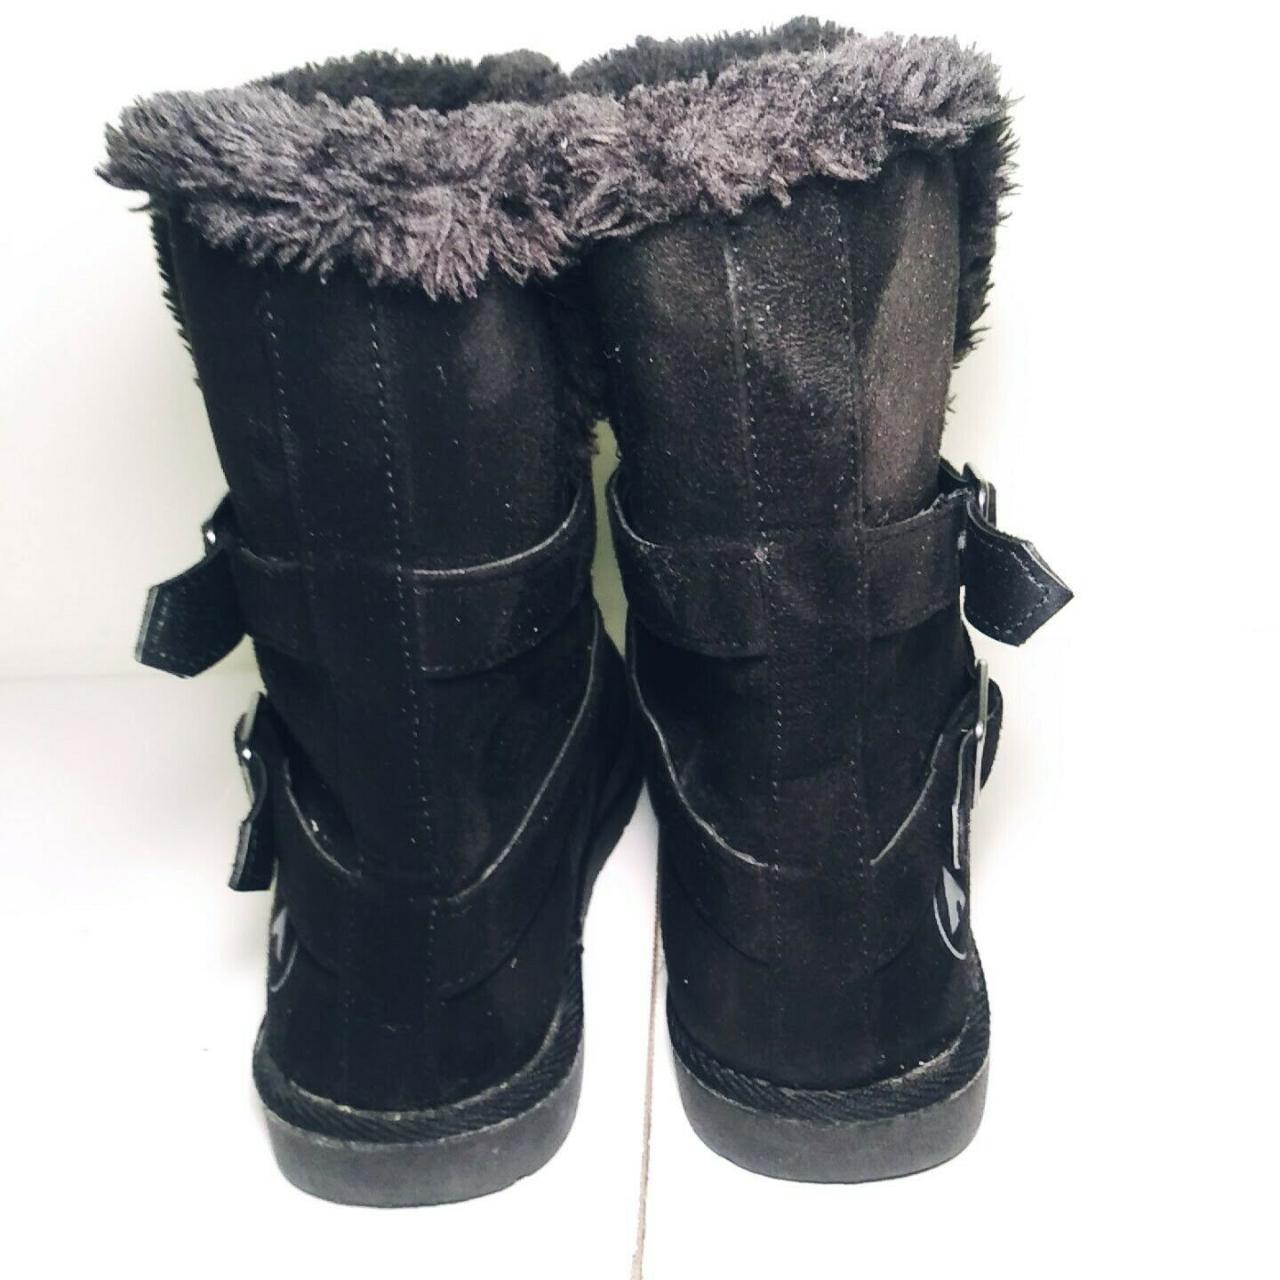 Size 7.5 Women's Airwalk Snow Boots - Depop